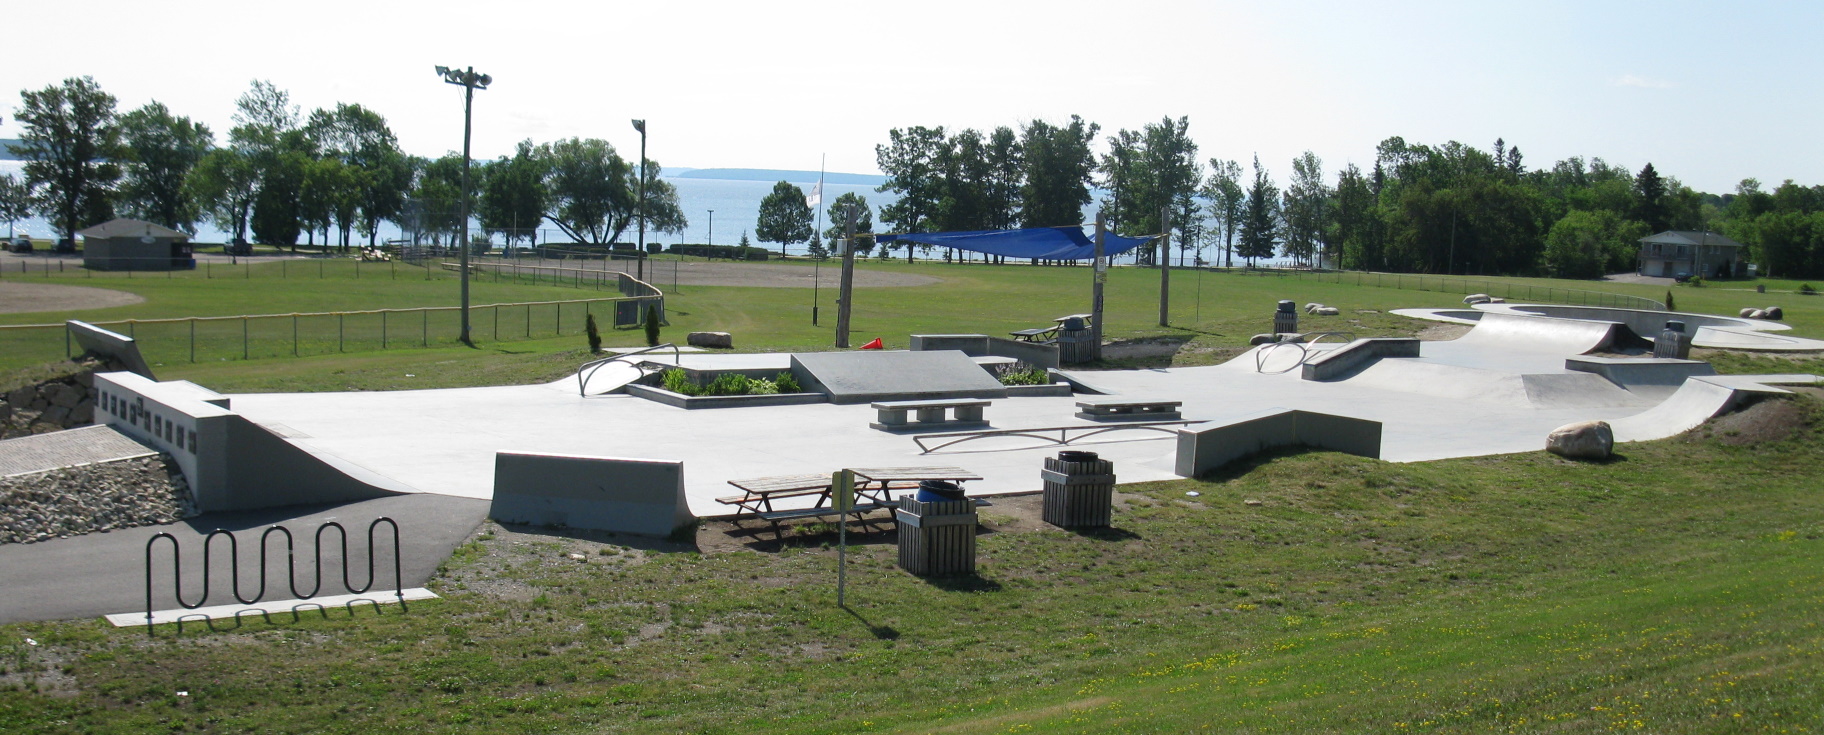 Empty skatepark overlooking the lake